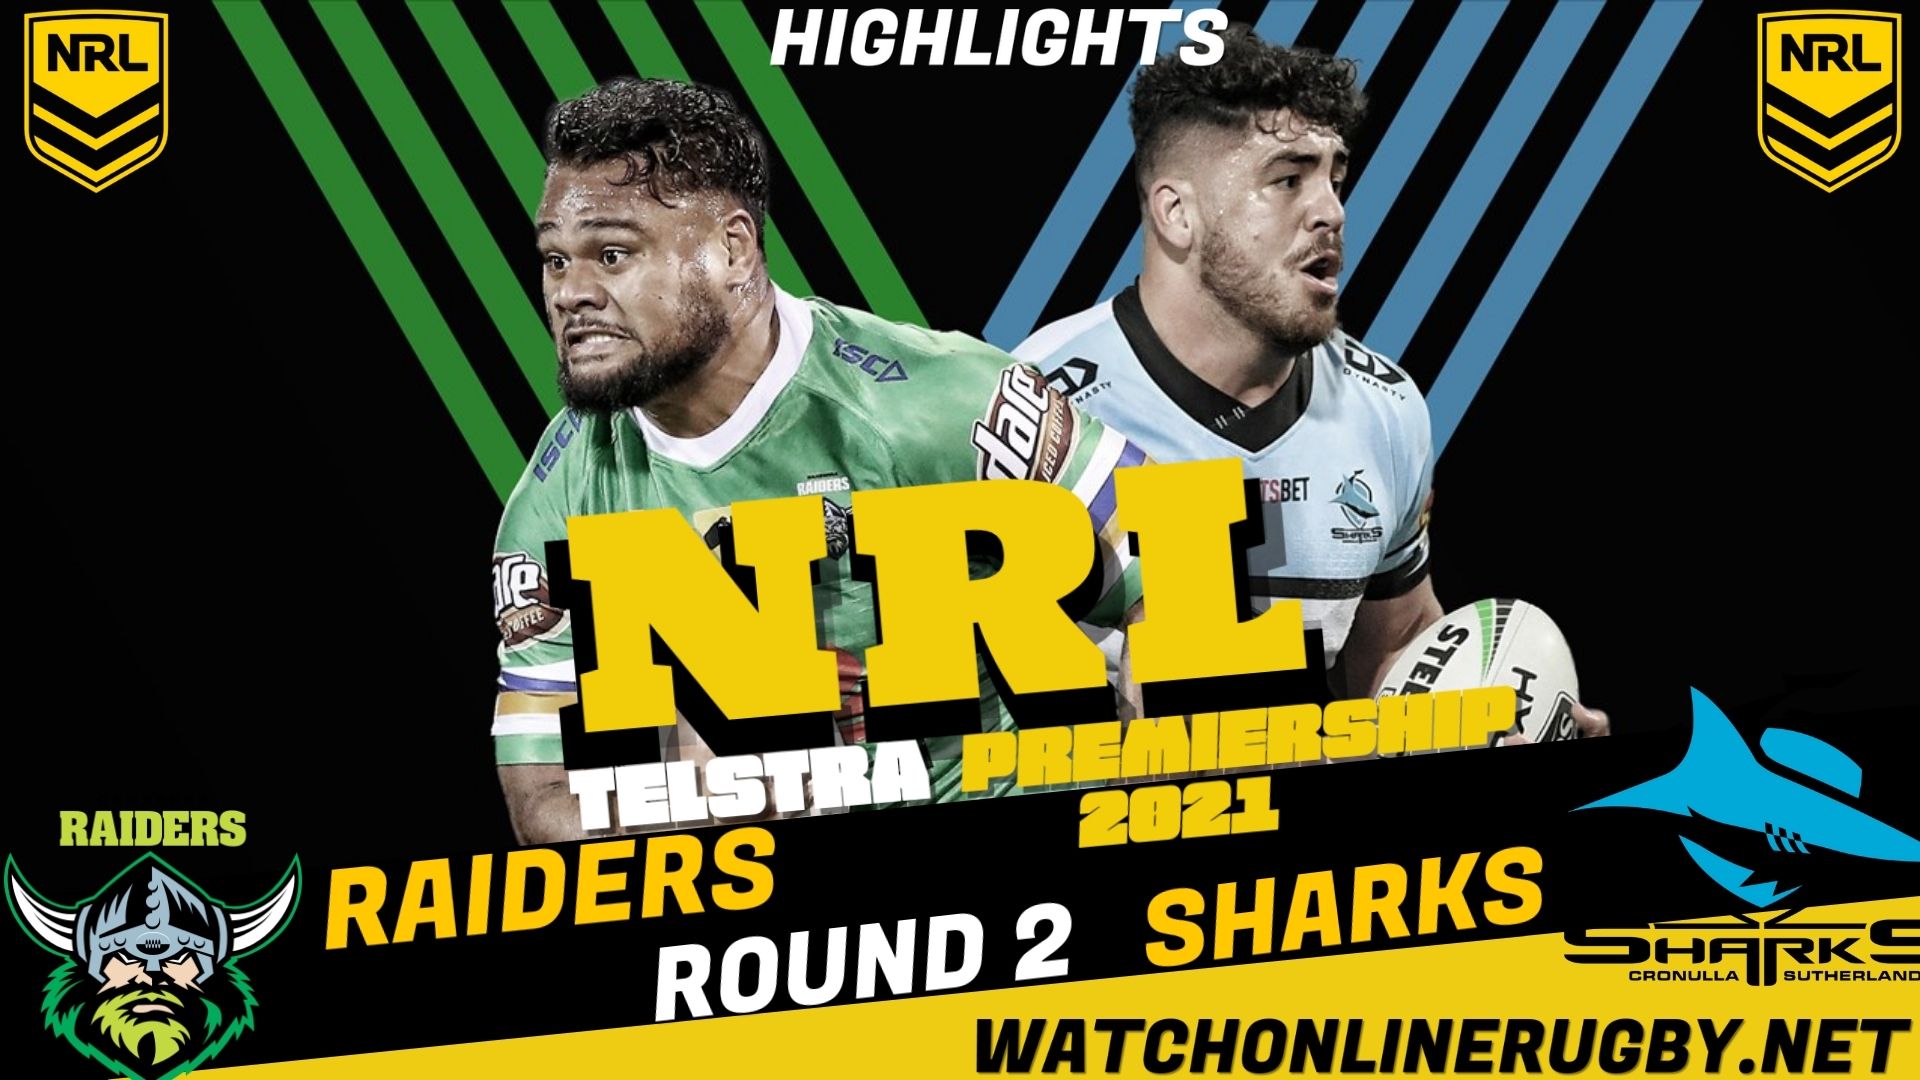 Sharks Vs Raiders Highlights RD 2 NRL Rugby